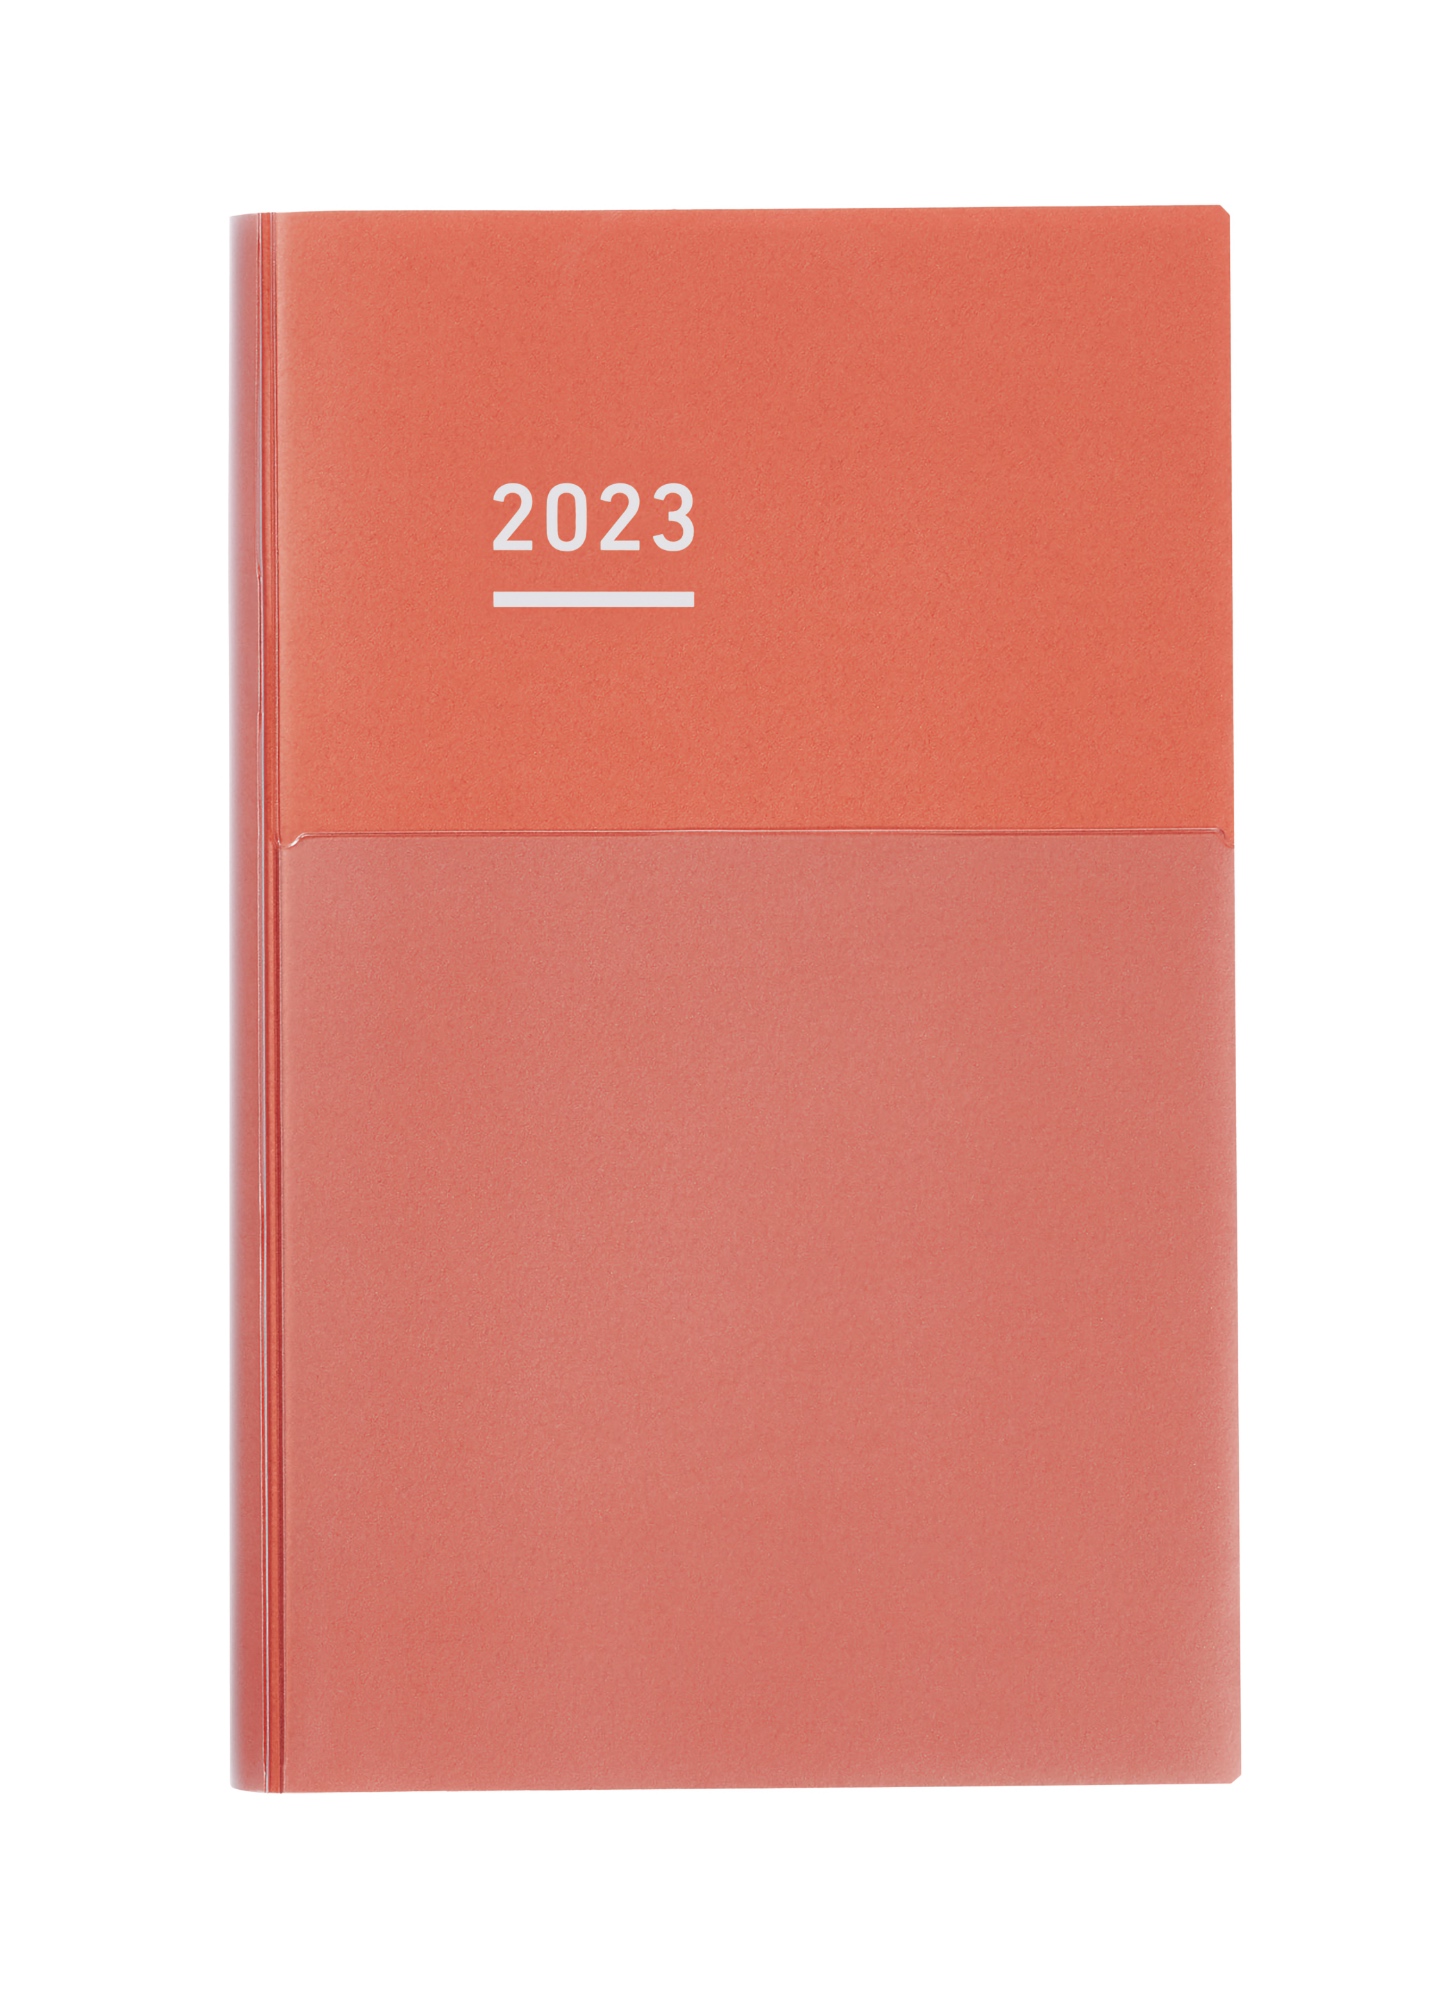 Kokuyo Jibun Techo DAYs Diary 2023 A5 Slim Red